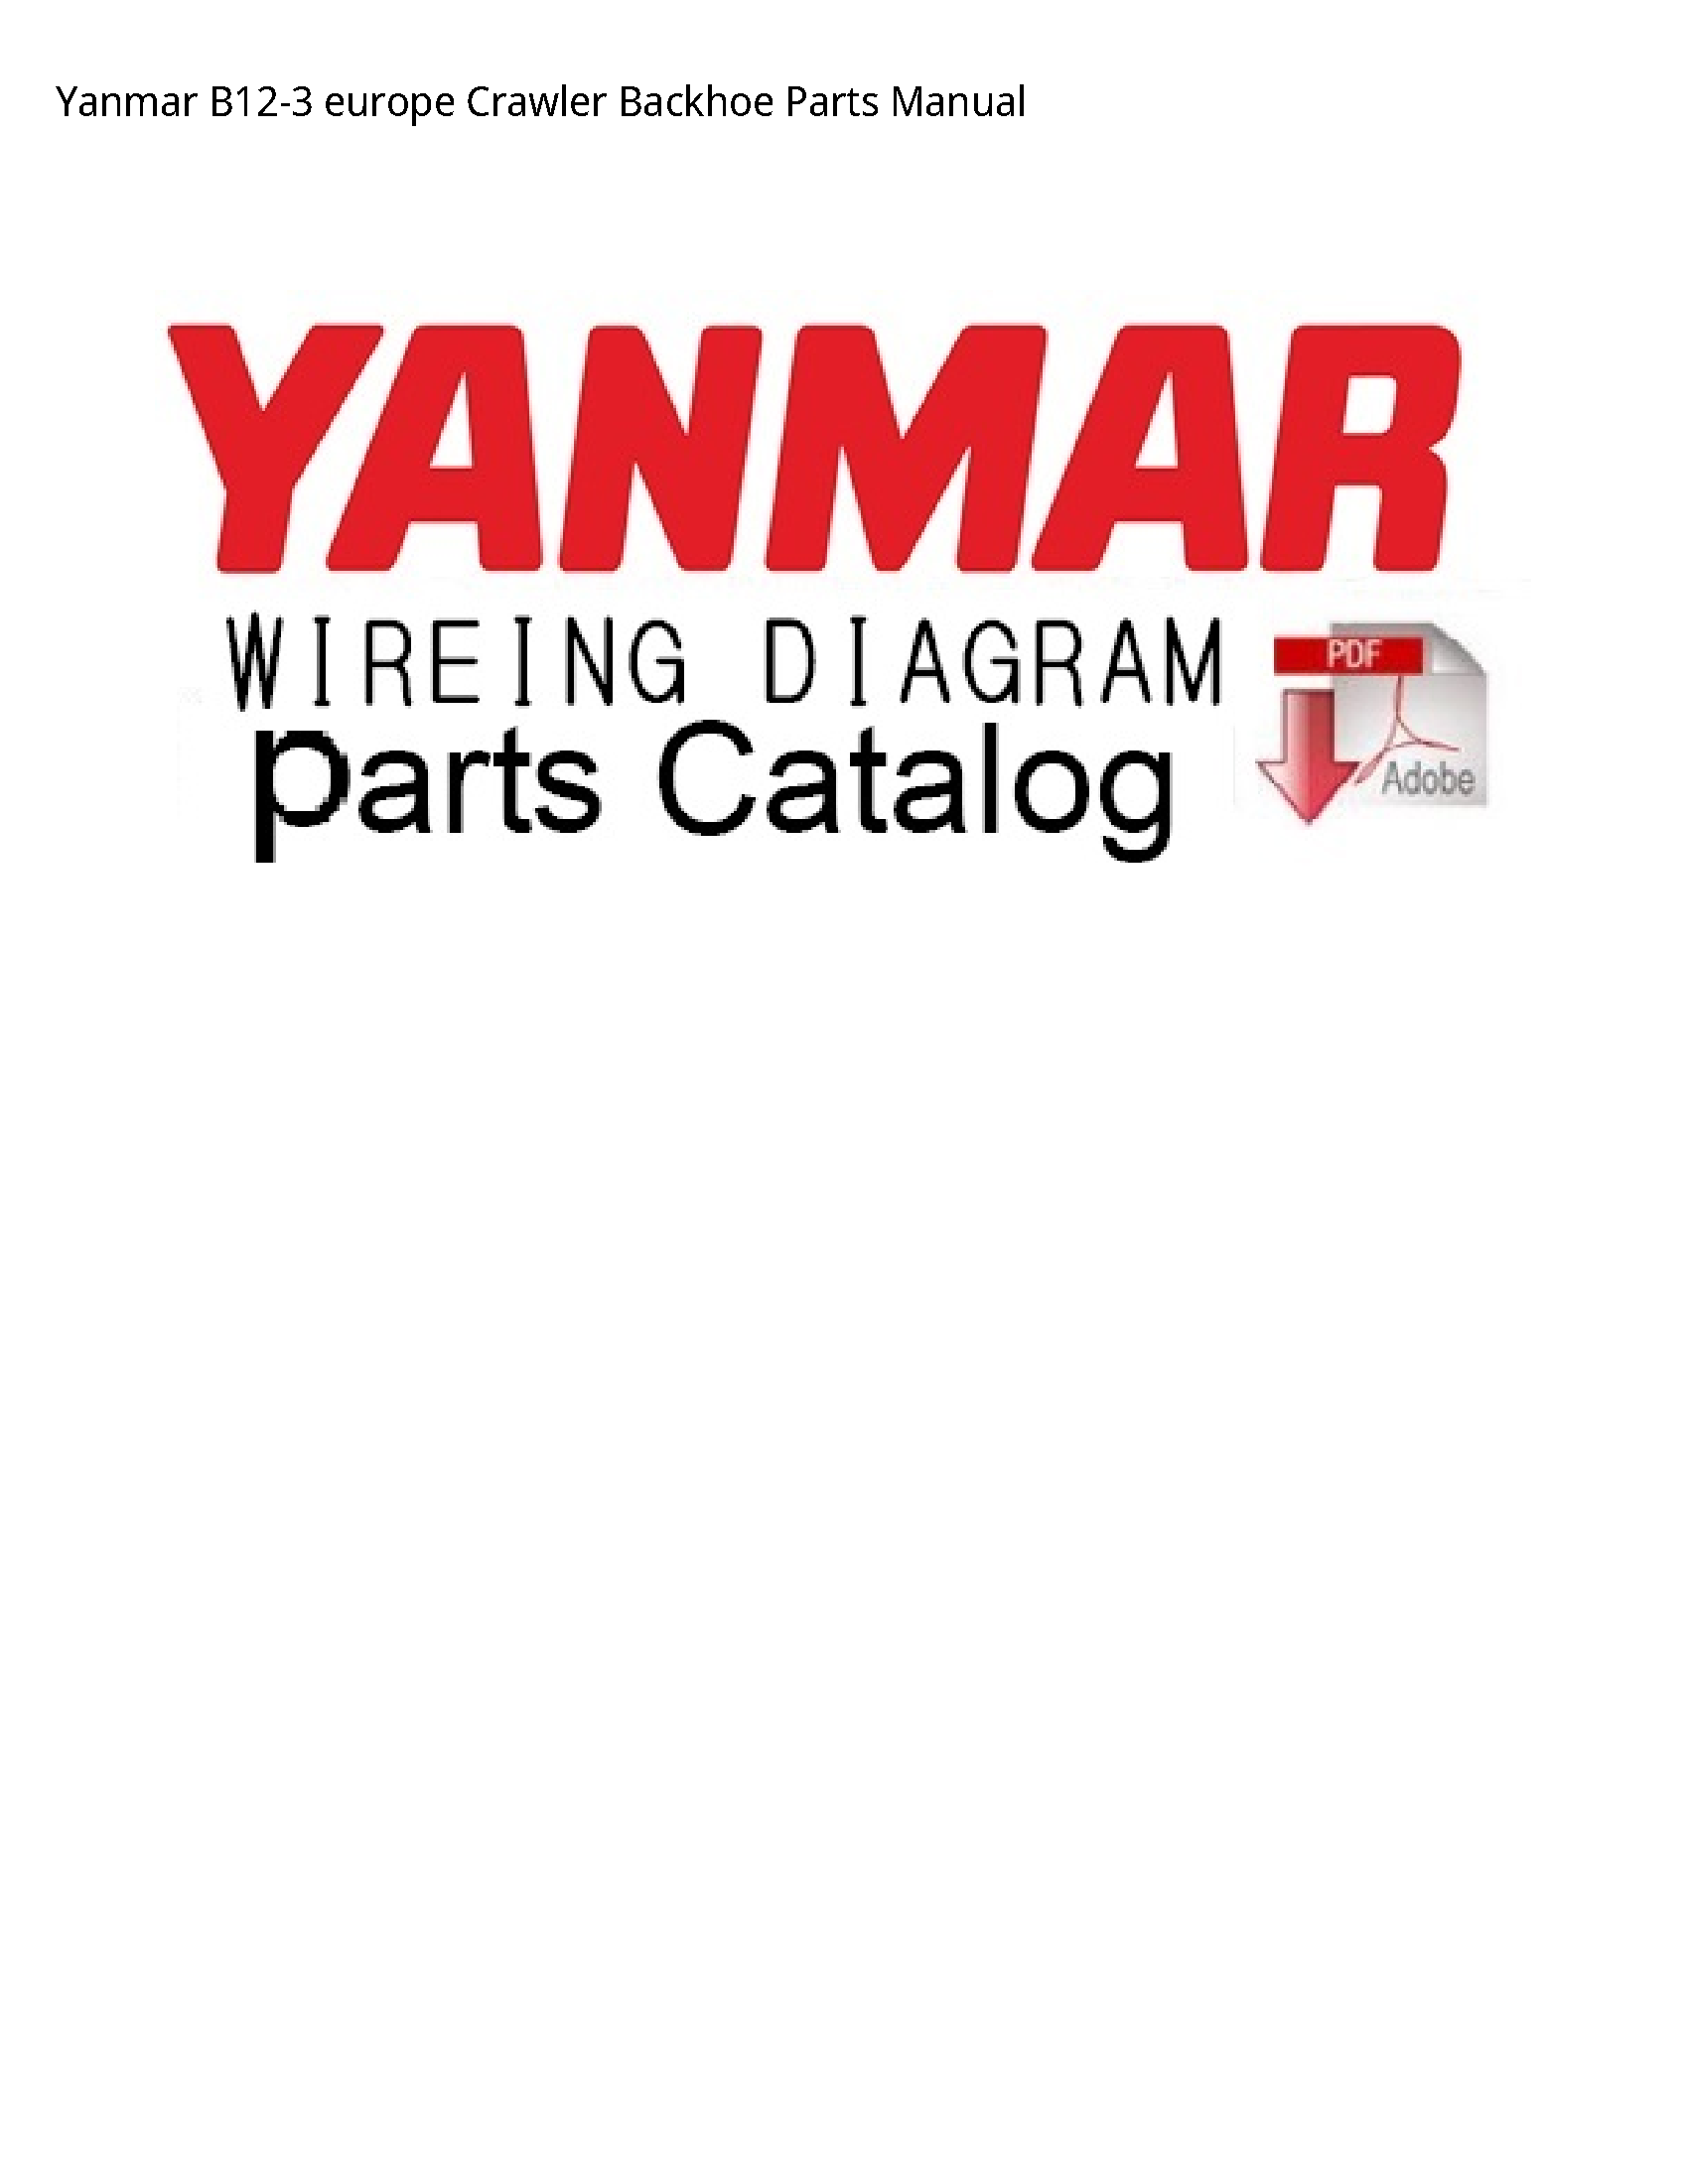 Yanmar B12-3 europe Crawler Backhoe Parts manual